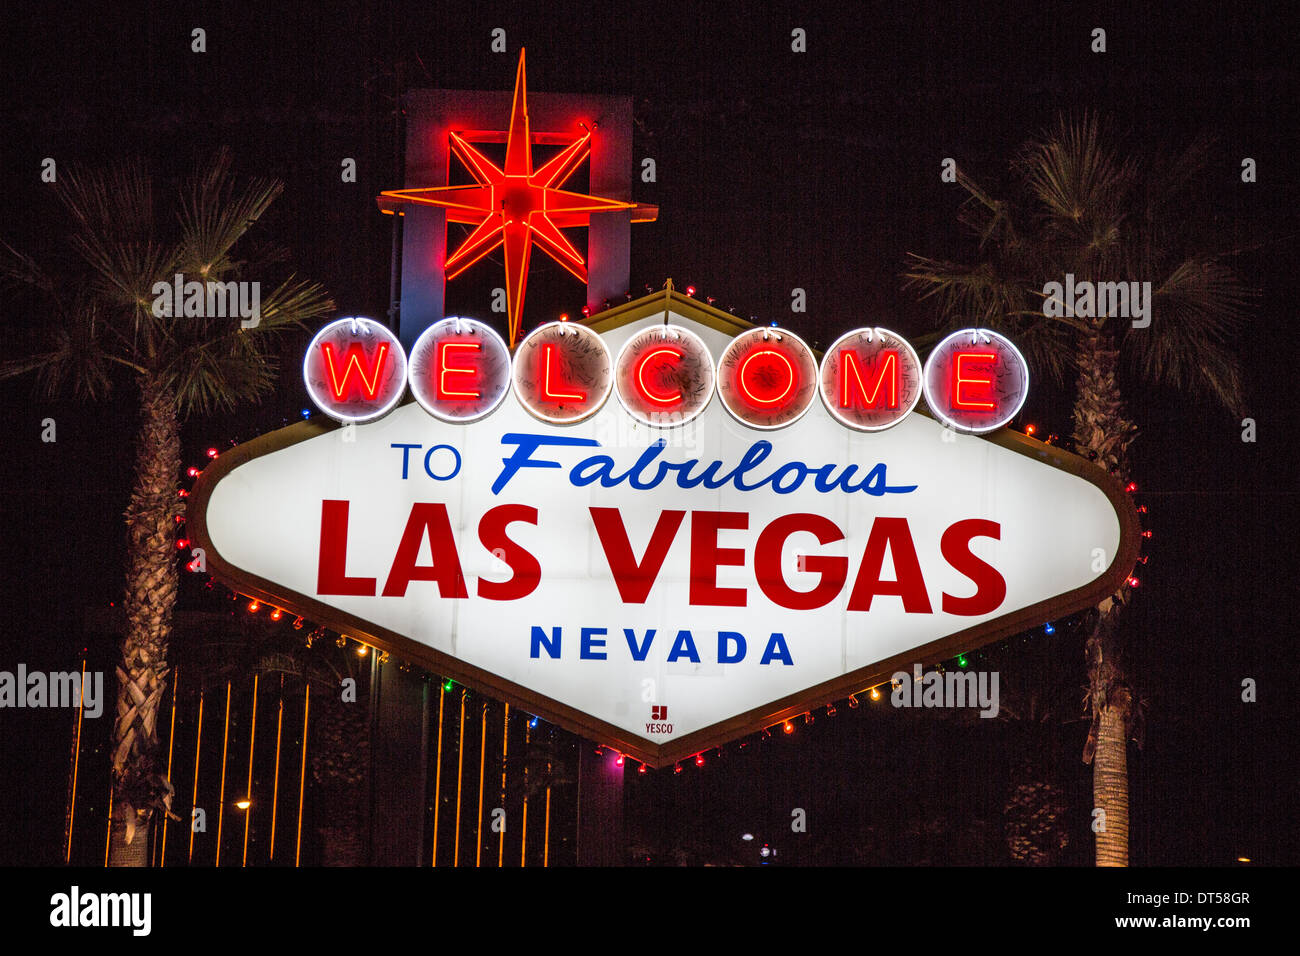 Las Vegas sign, welcome to fabulous Las Vegas, Nevada, U.S.A. Stock Photo